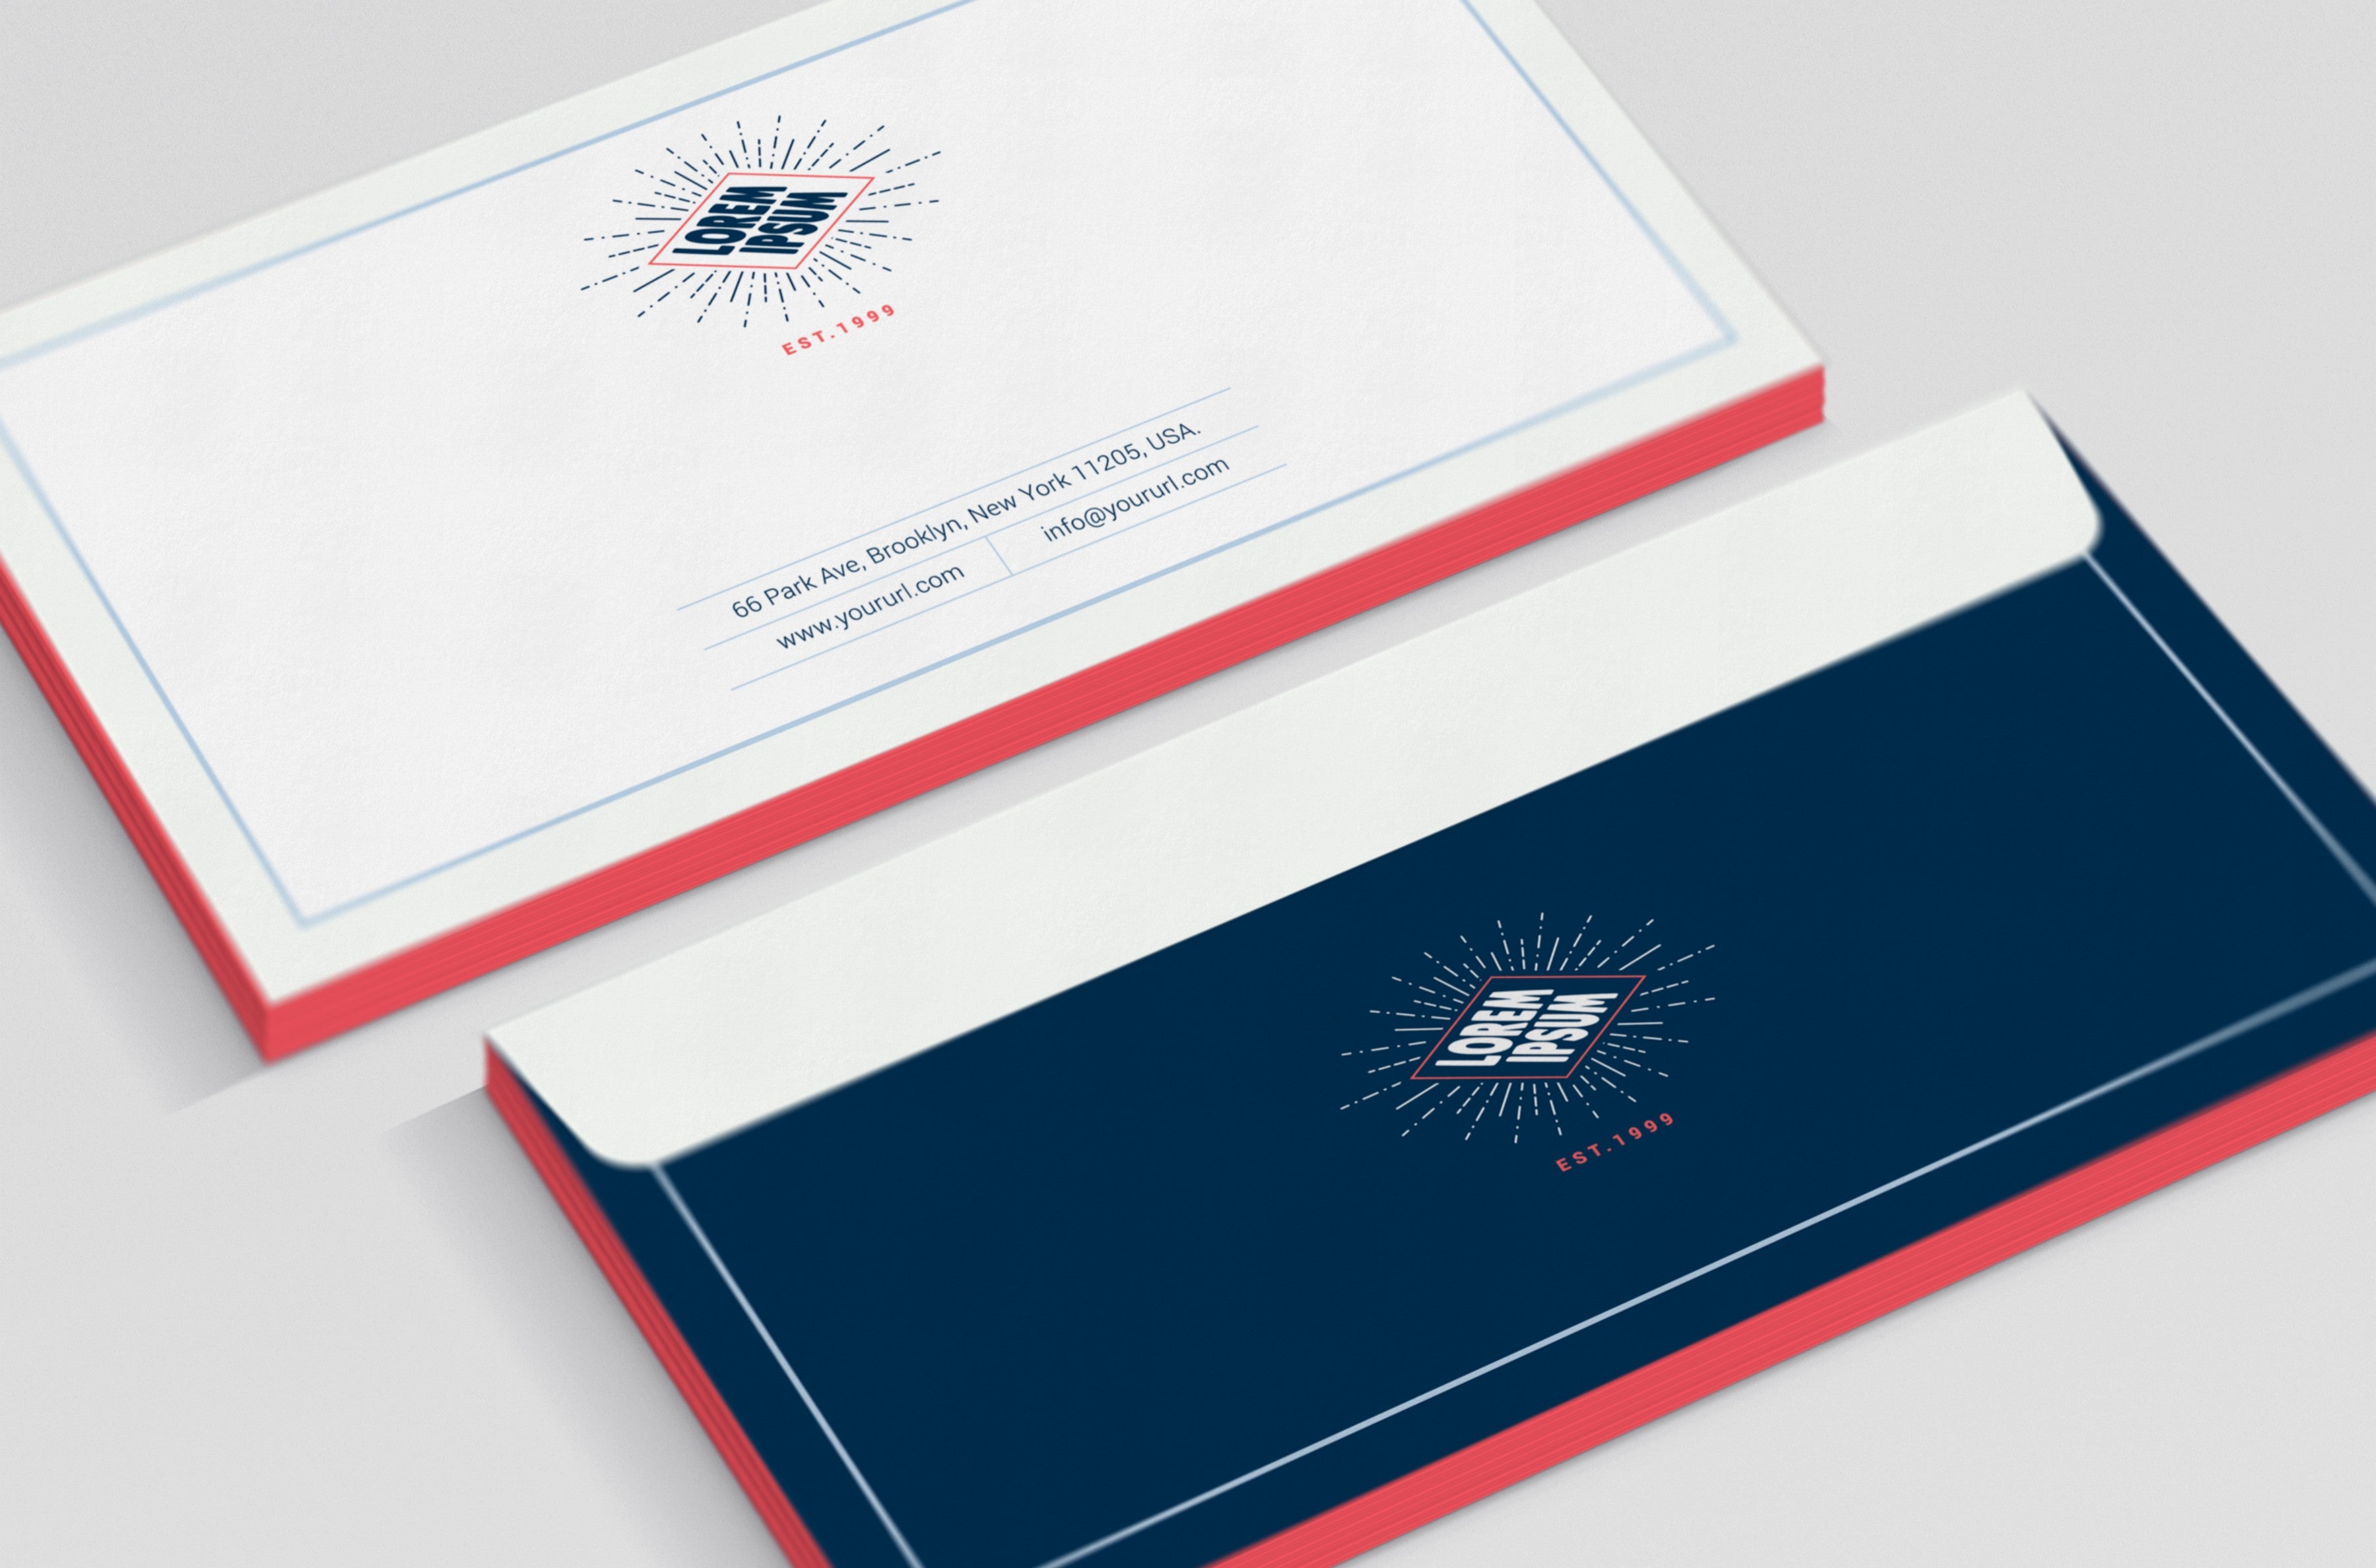 Custom Printed Envelopes